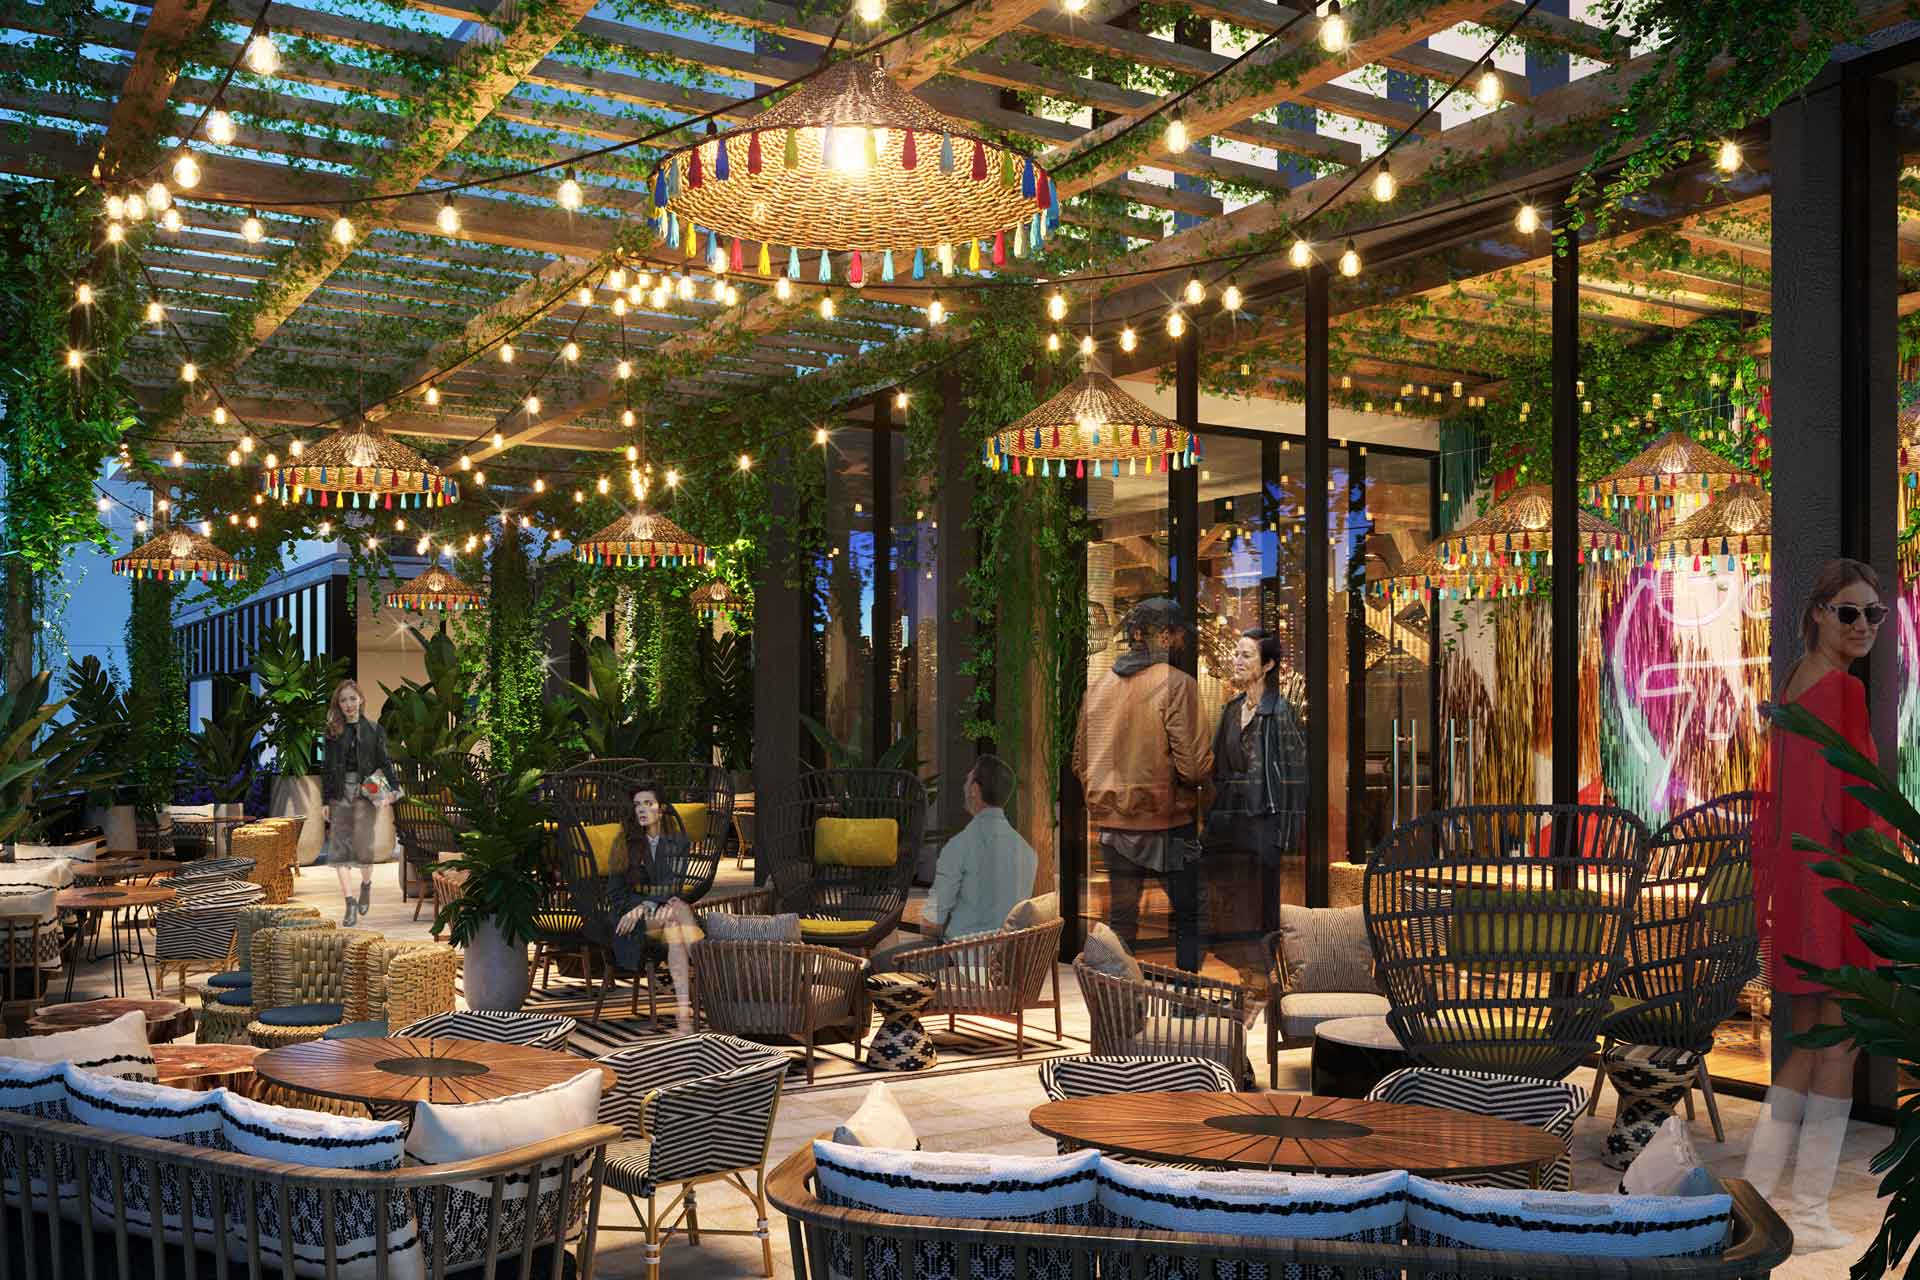 Celano Design Studio reveals two new restaurant concepts at Resorts